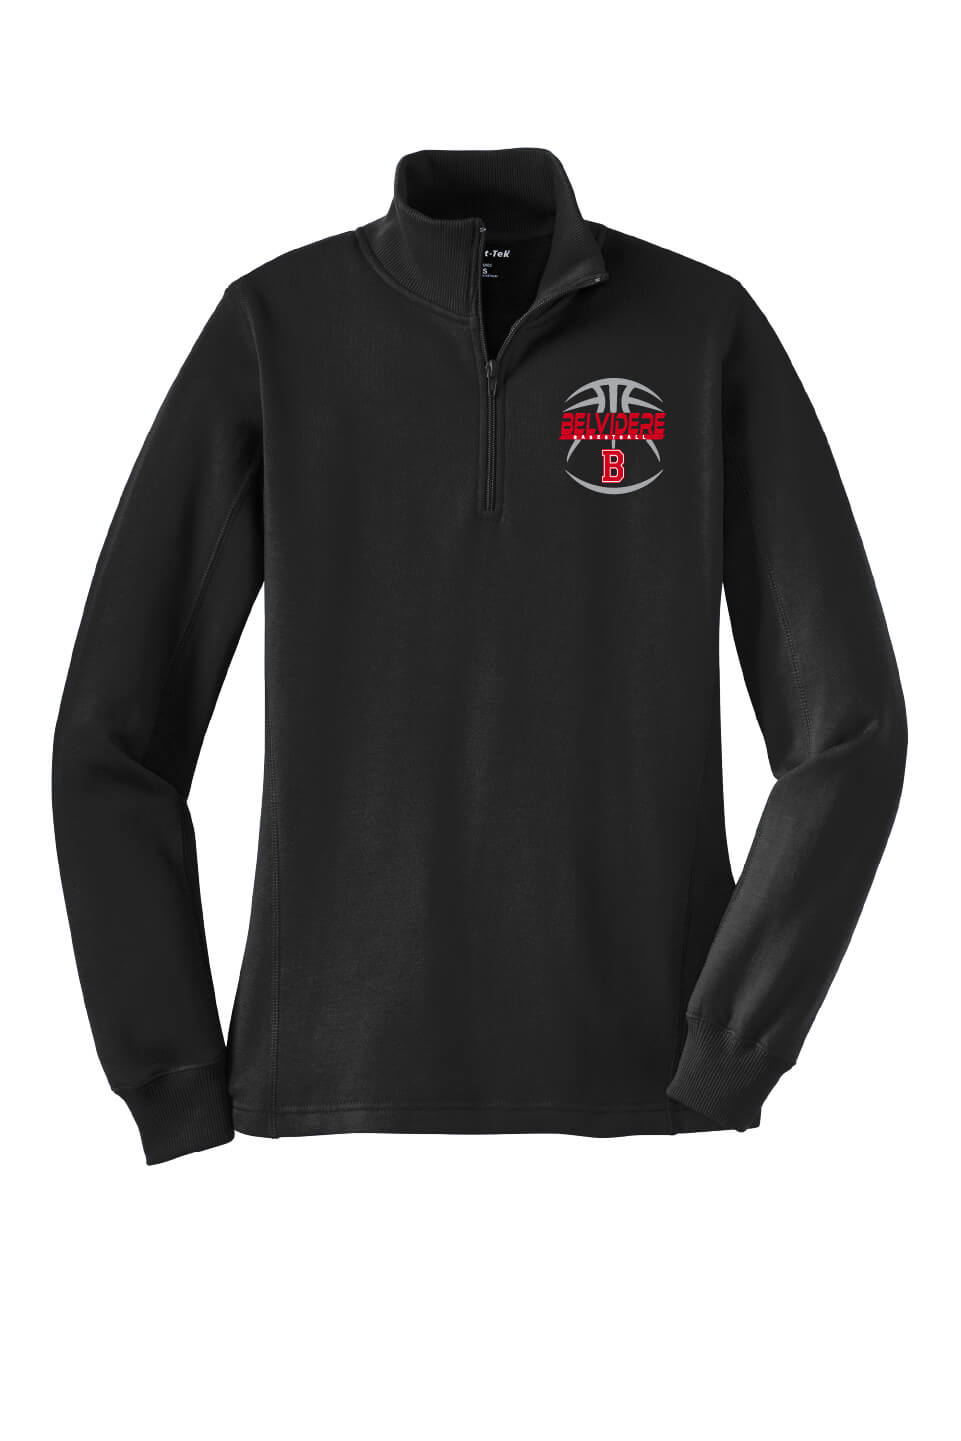 Sport Tek 1/4 Zip Sweatshirt (Ladies) black